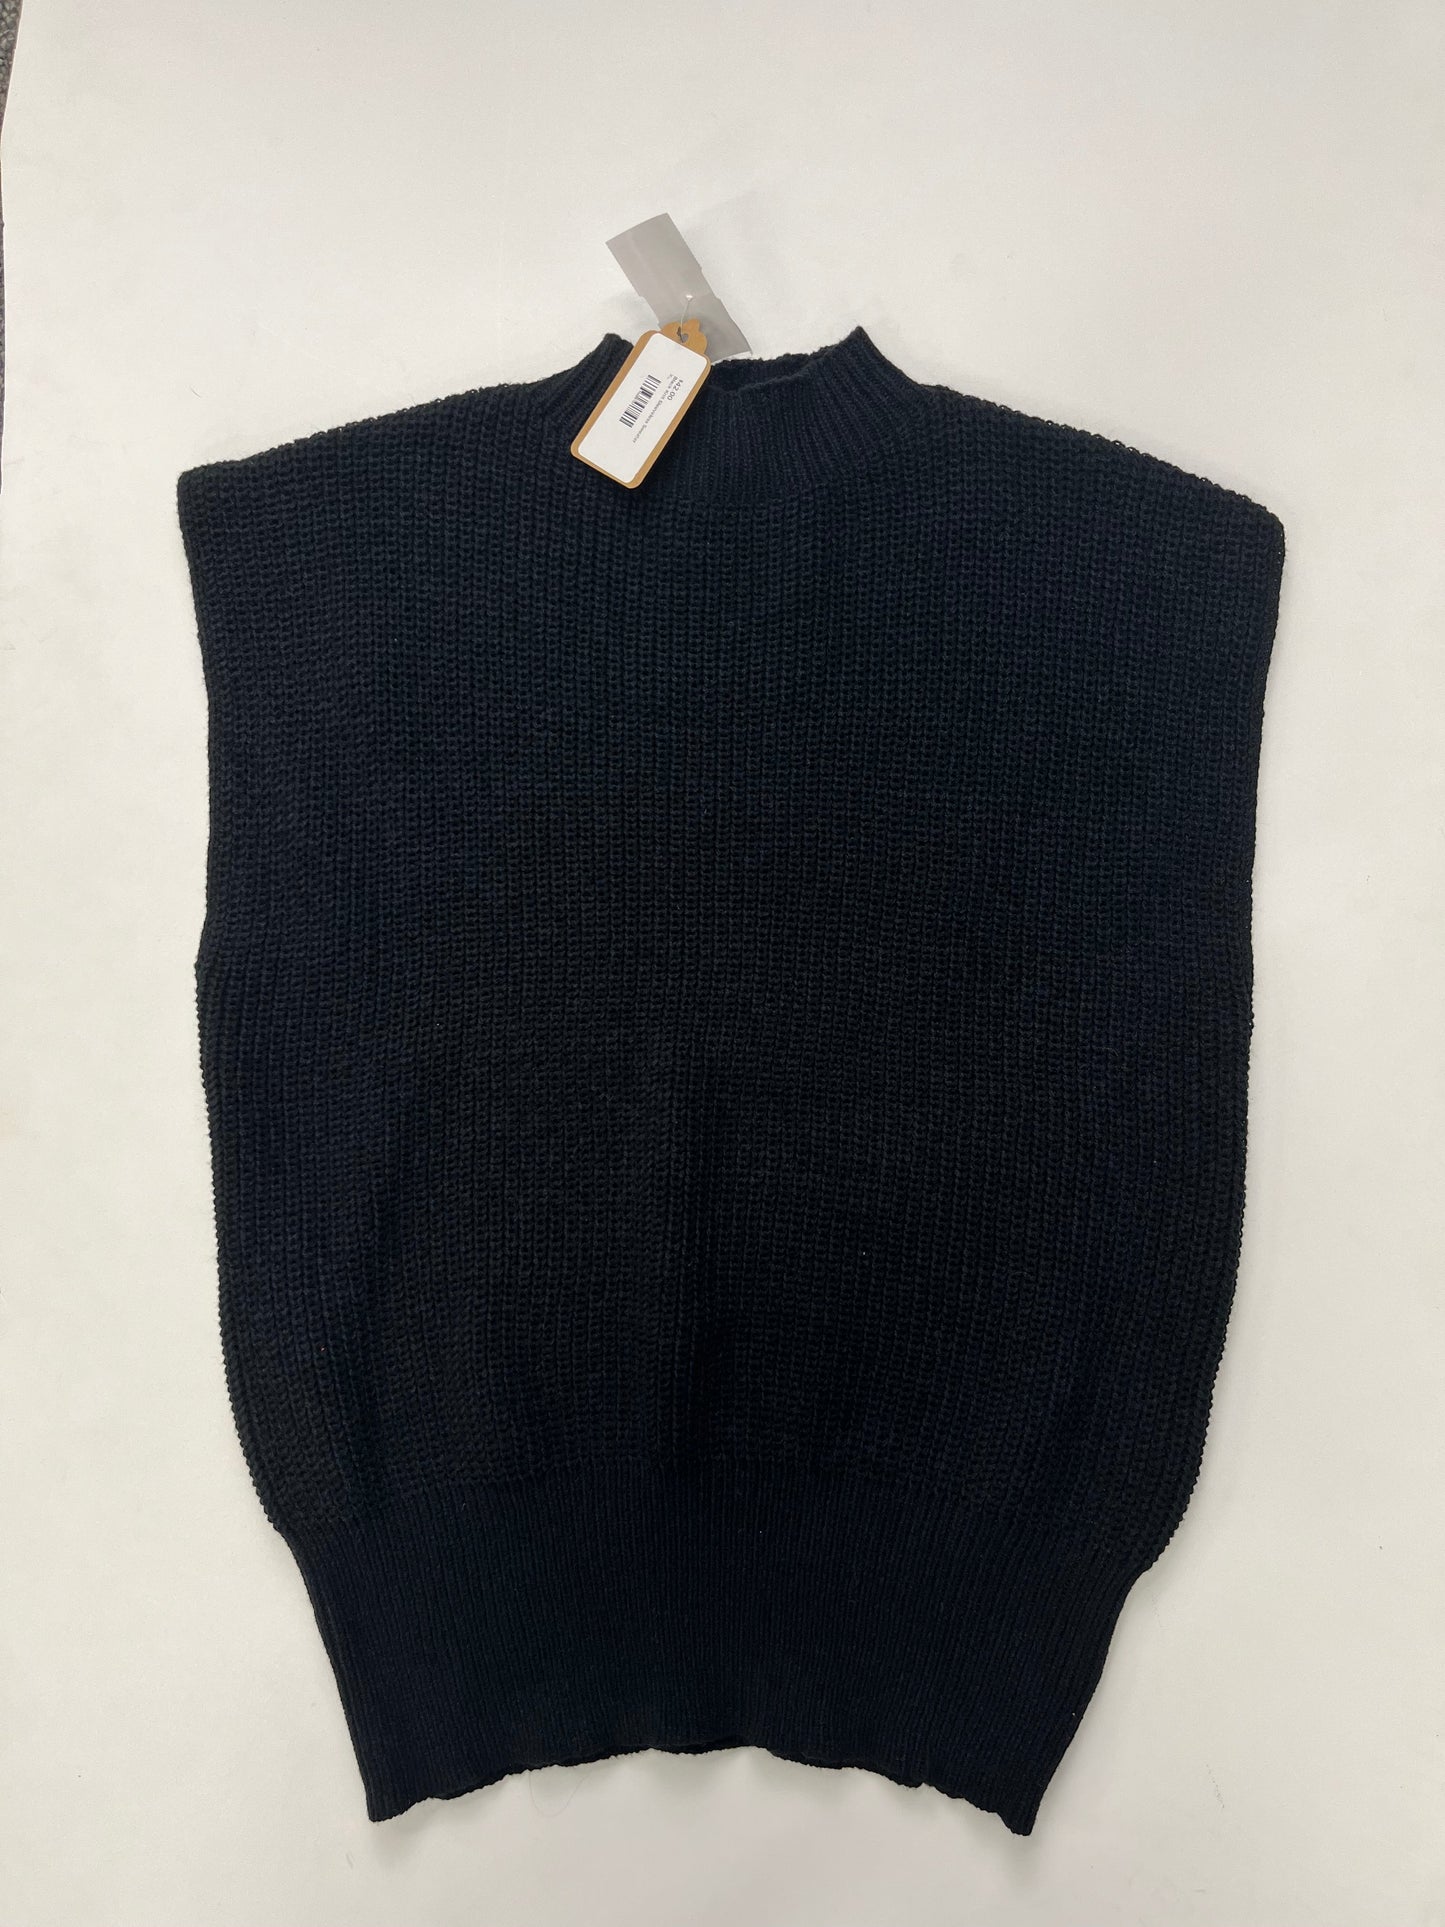 Black Sweater Short Sleeve Cmc, Size Xl